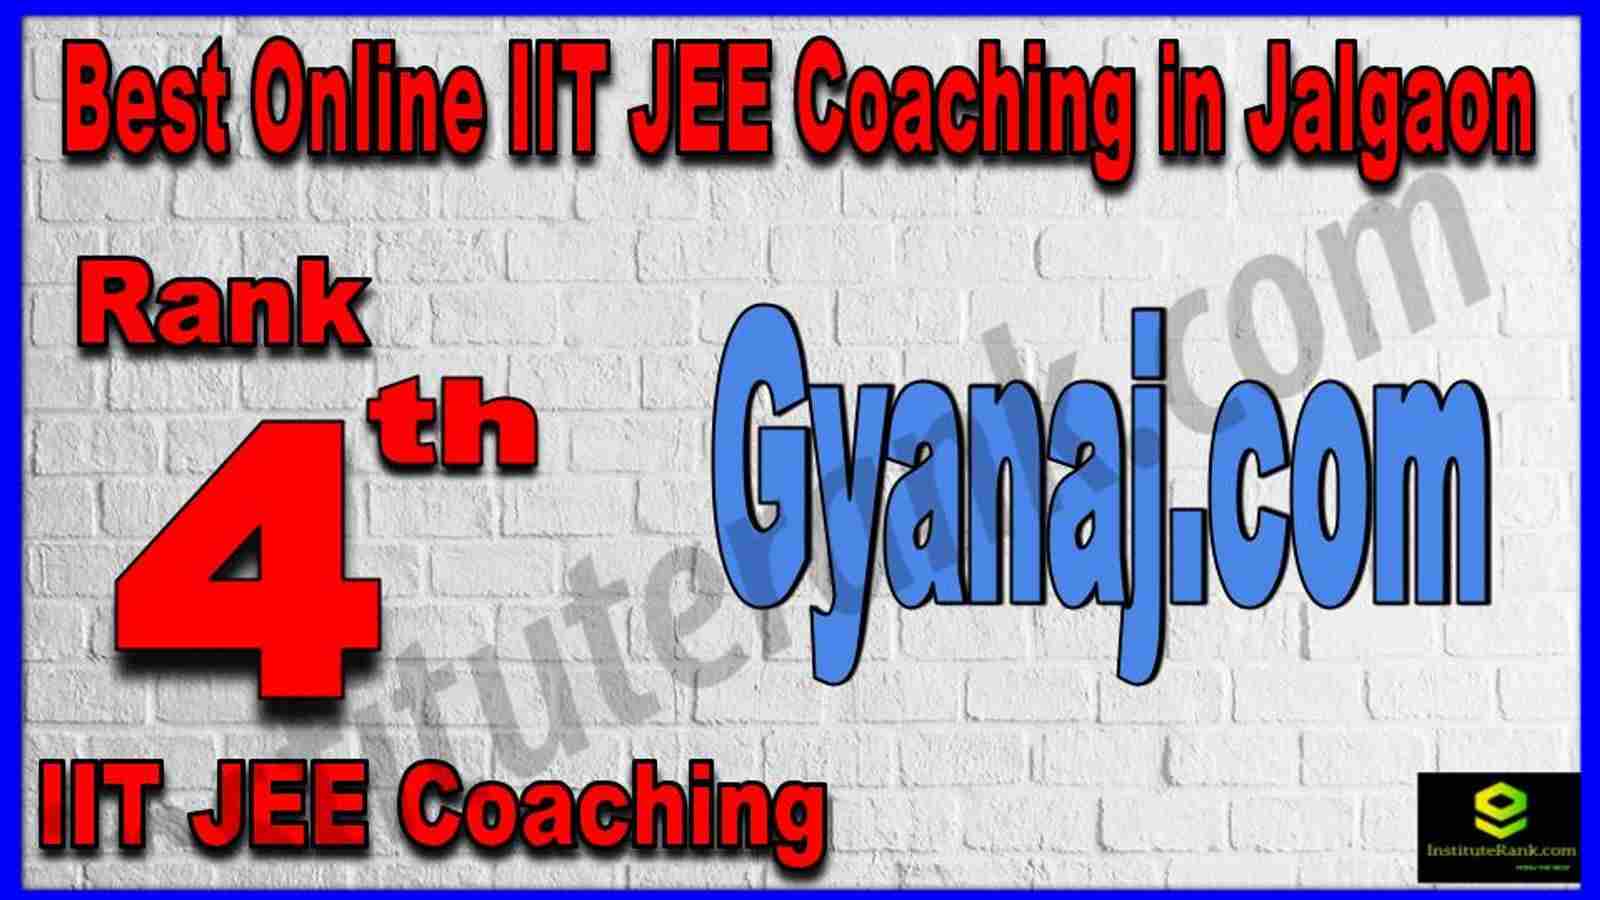 Rank 4th Best Online IIT JEE Coaching in Jalgaon